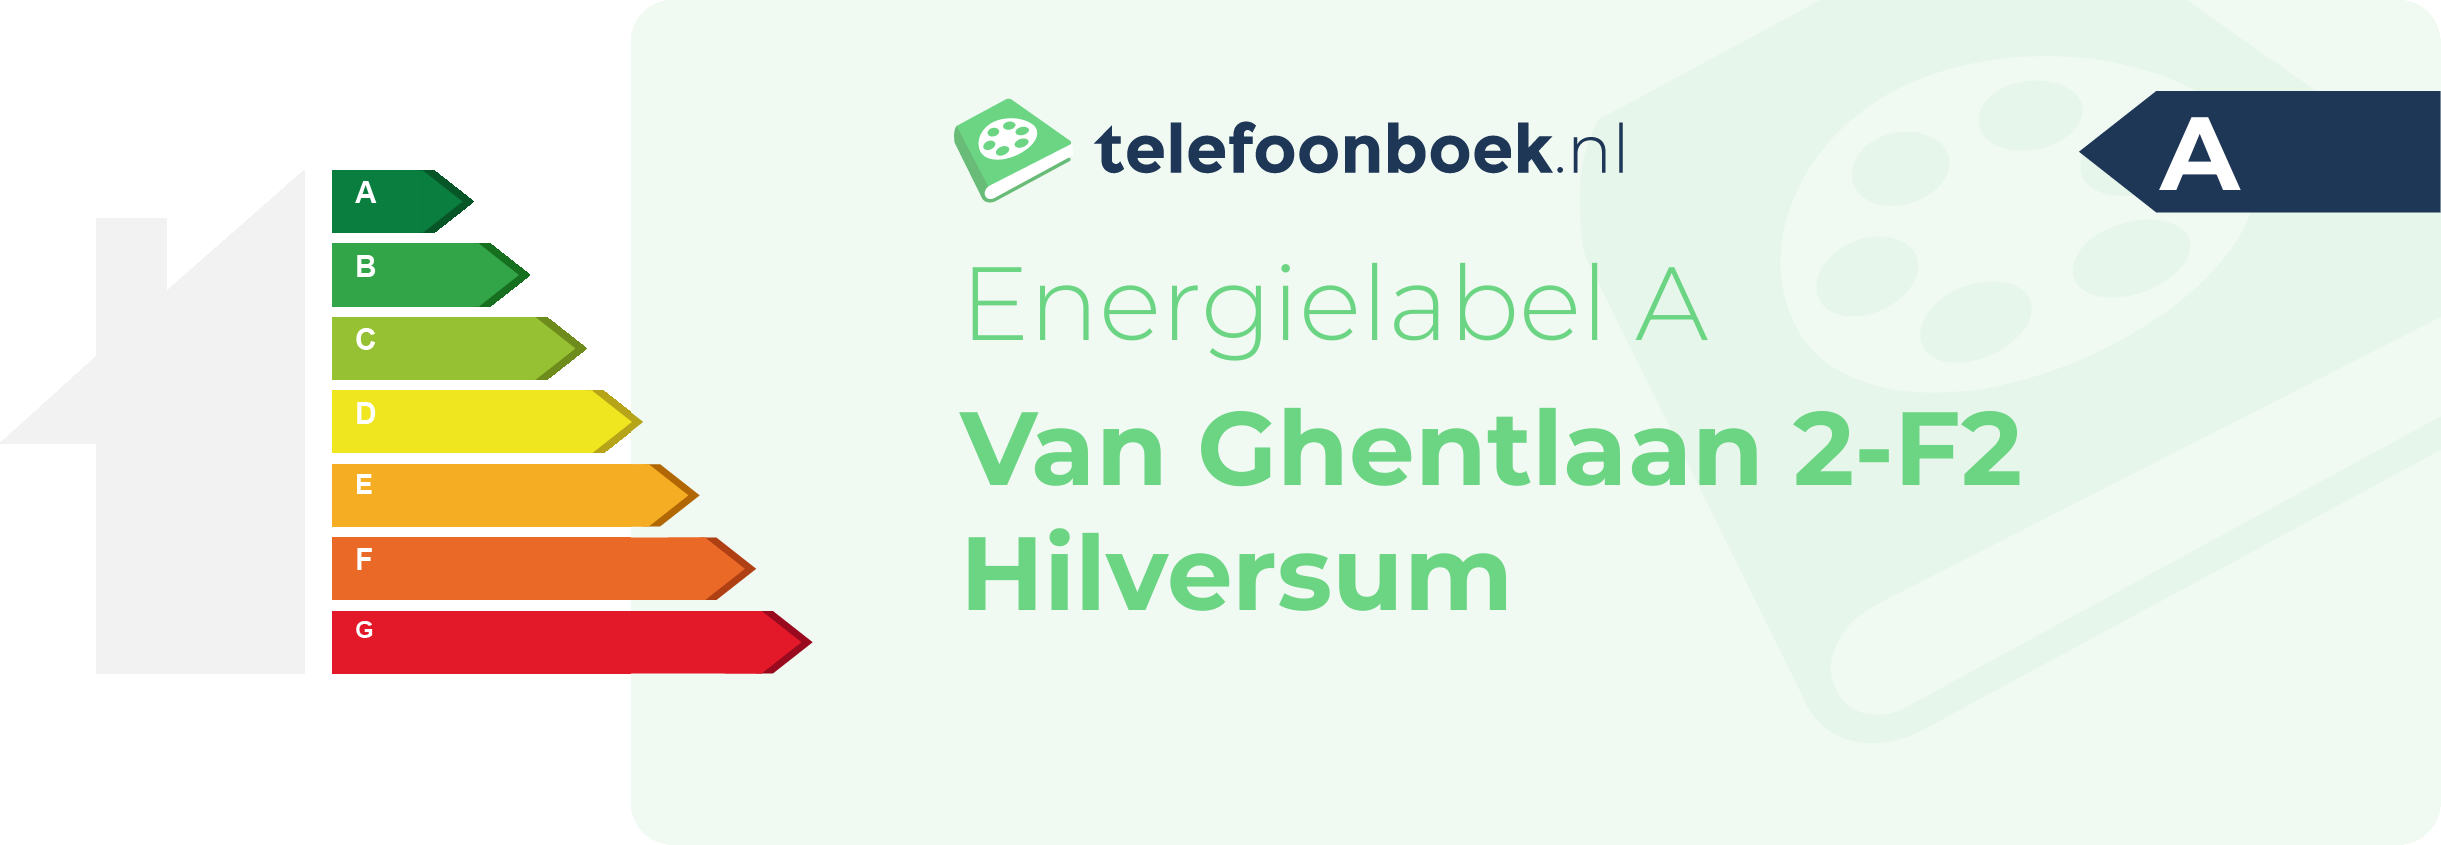 Energielabel Van Ghentlaan 2-F2 Hilversum